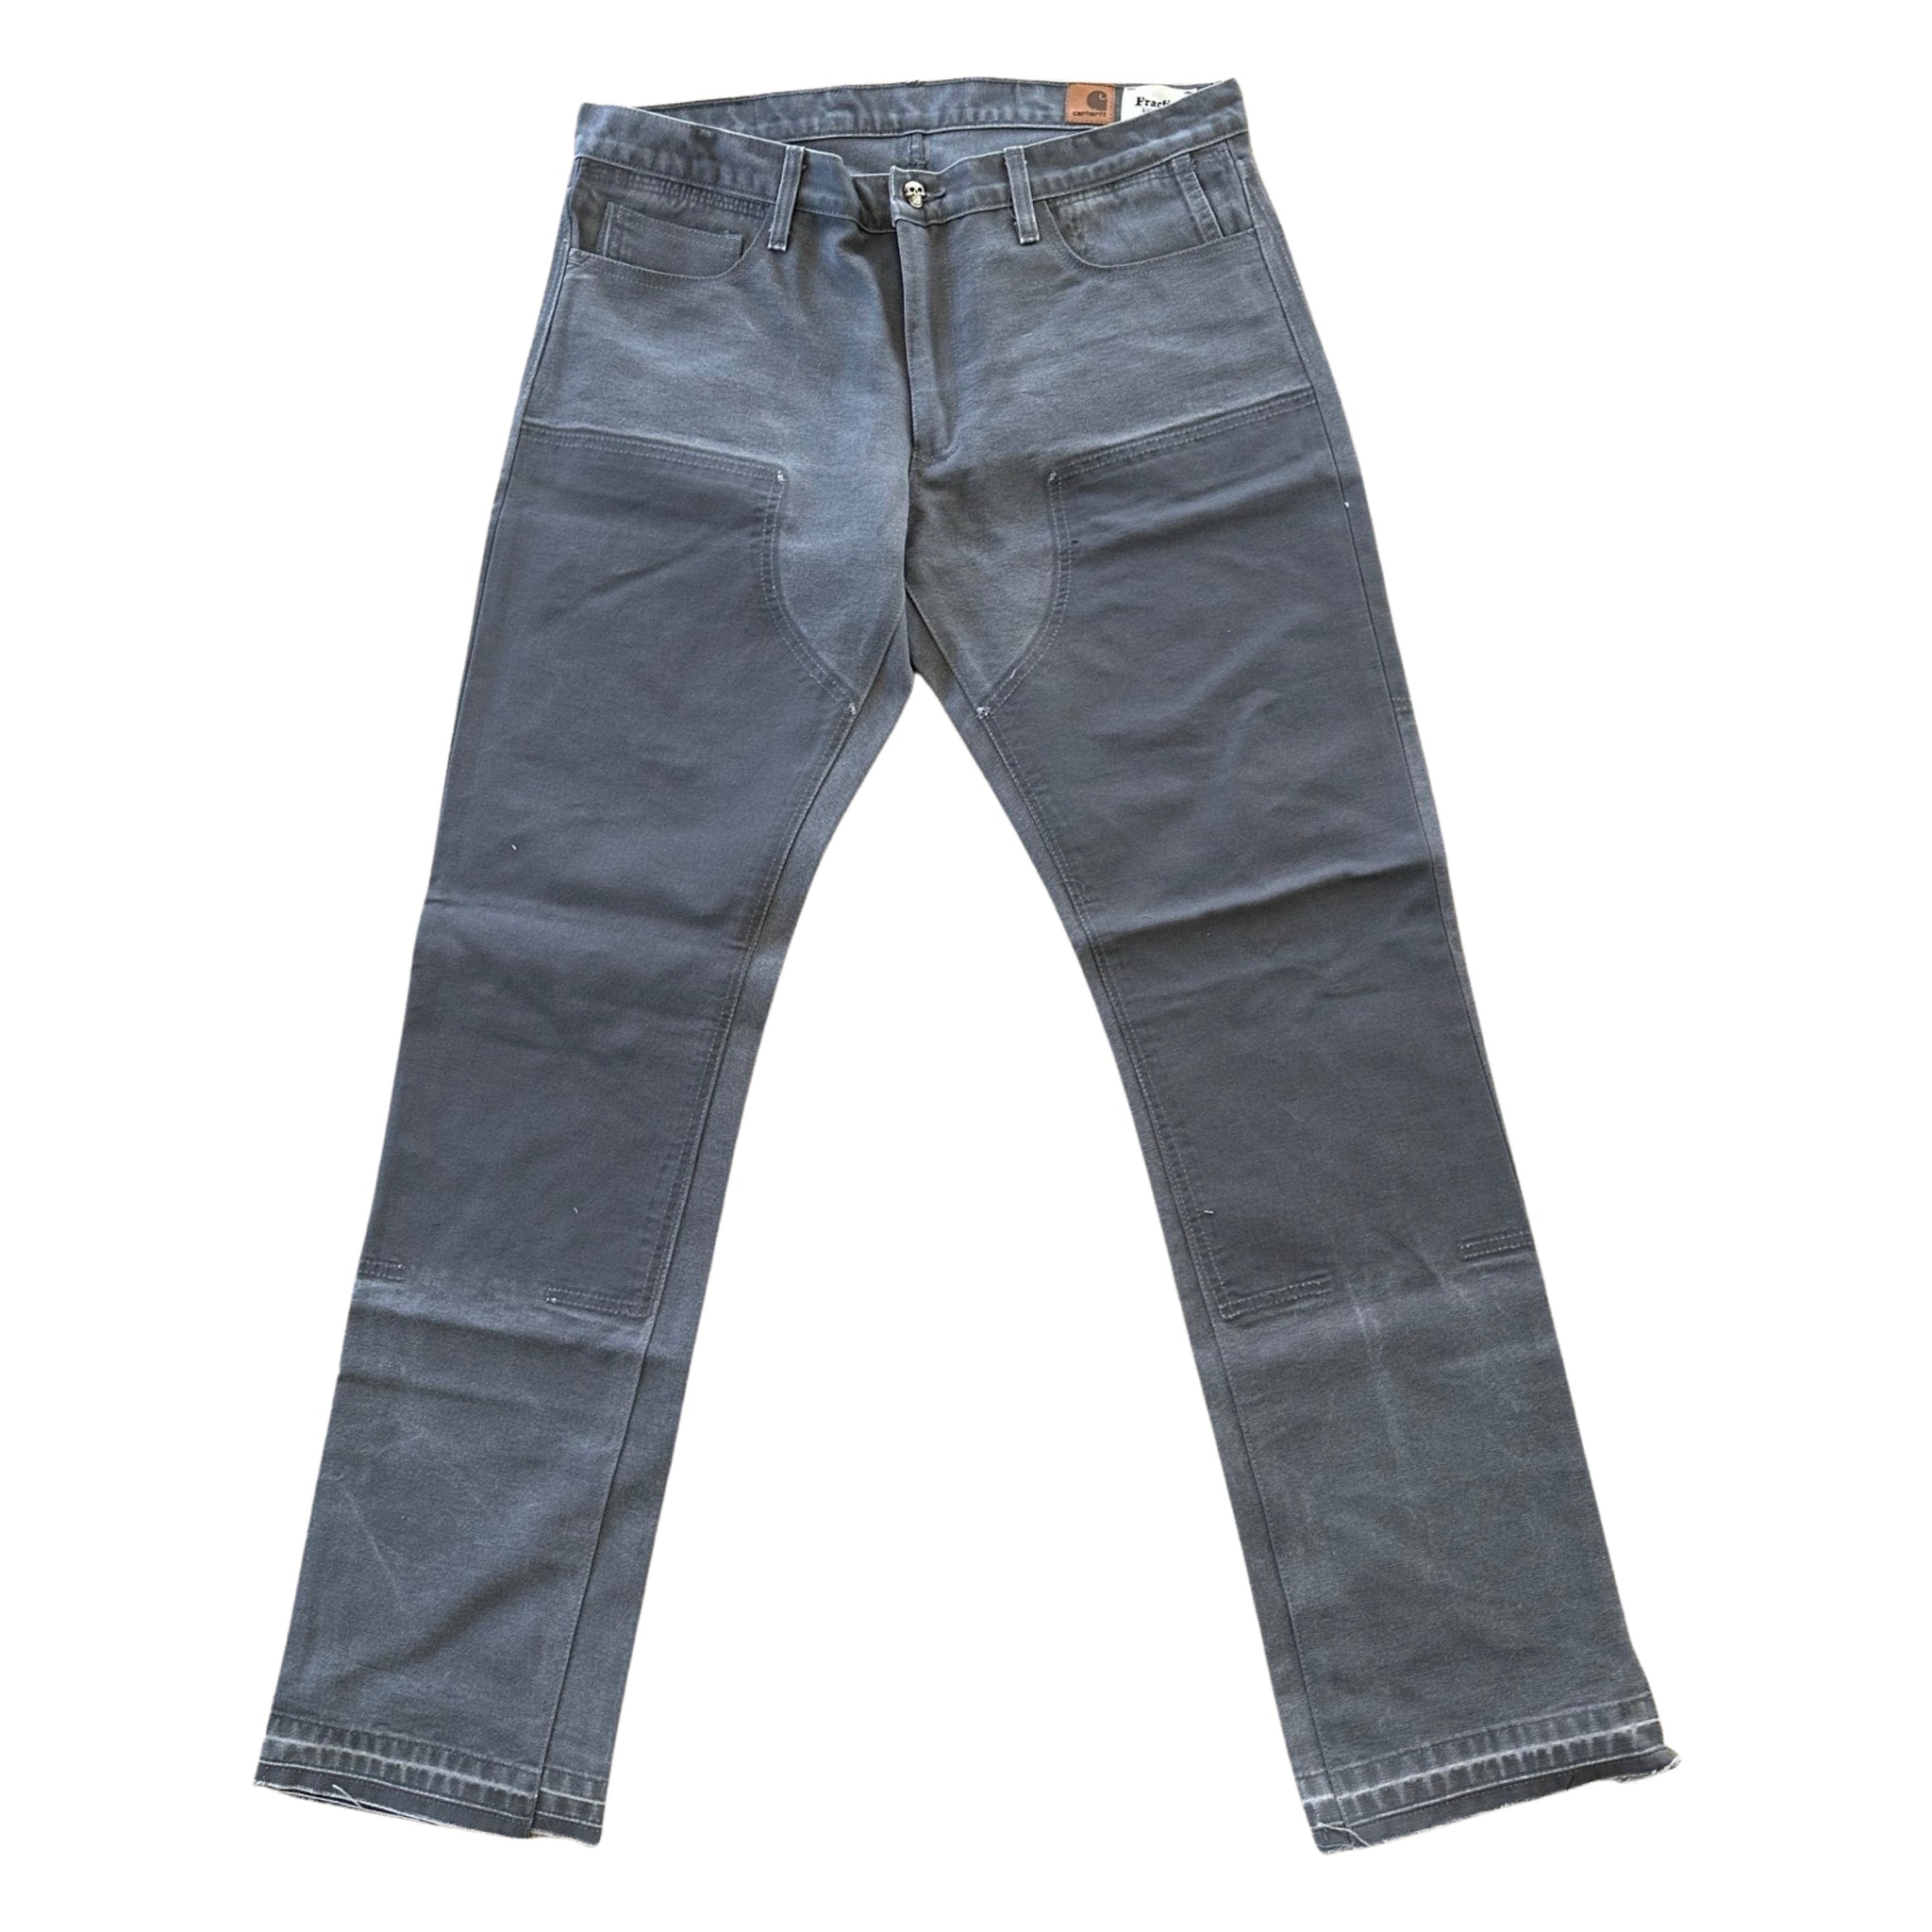 5 Pocket Jean - Grey